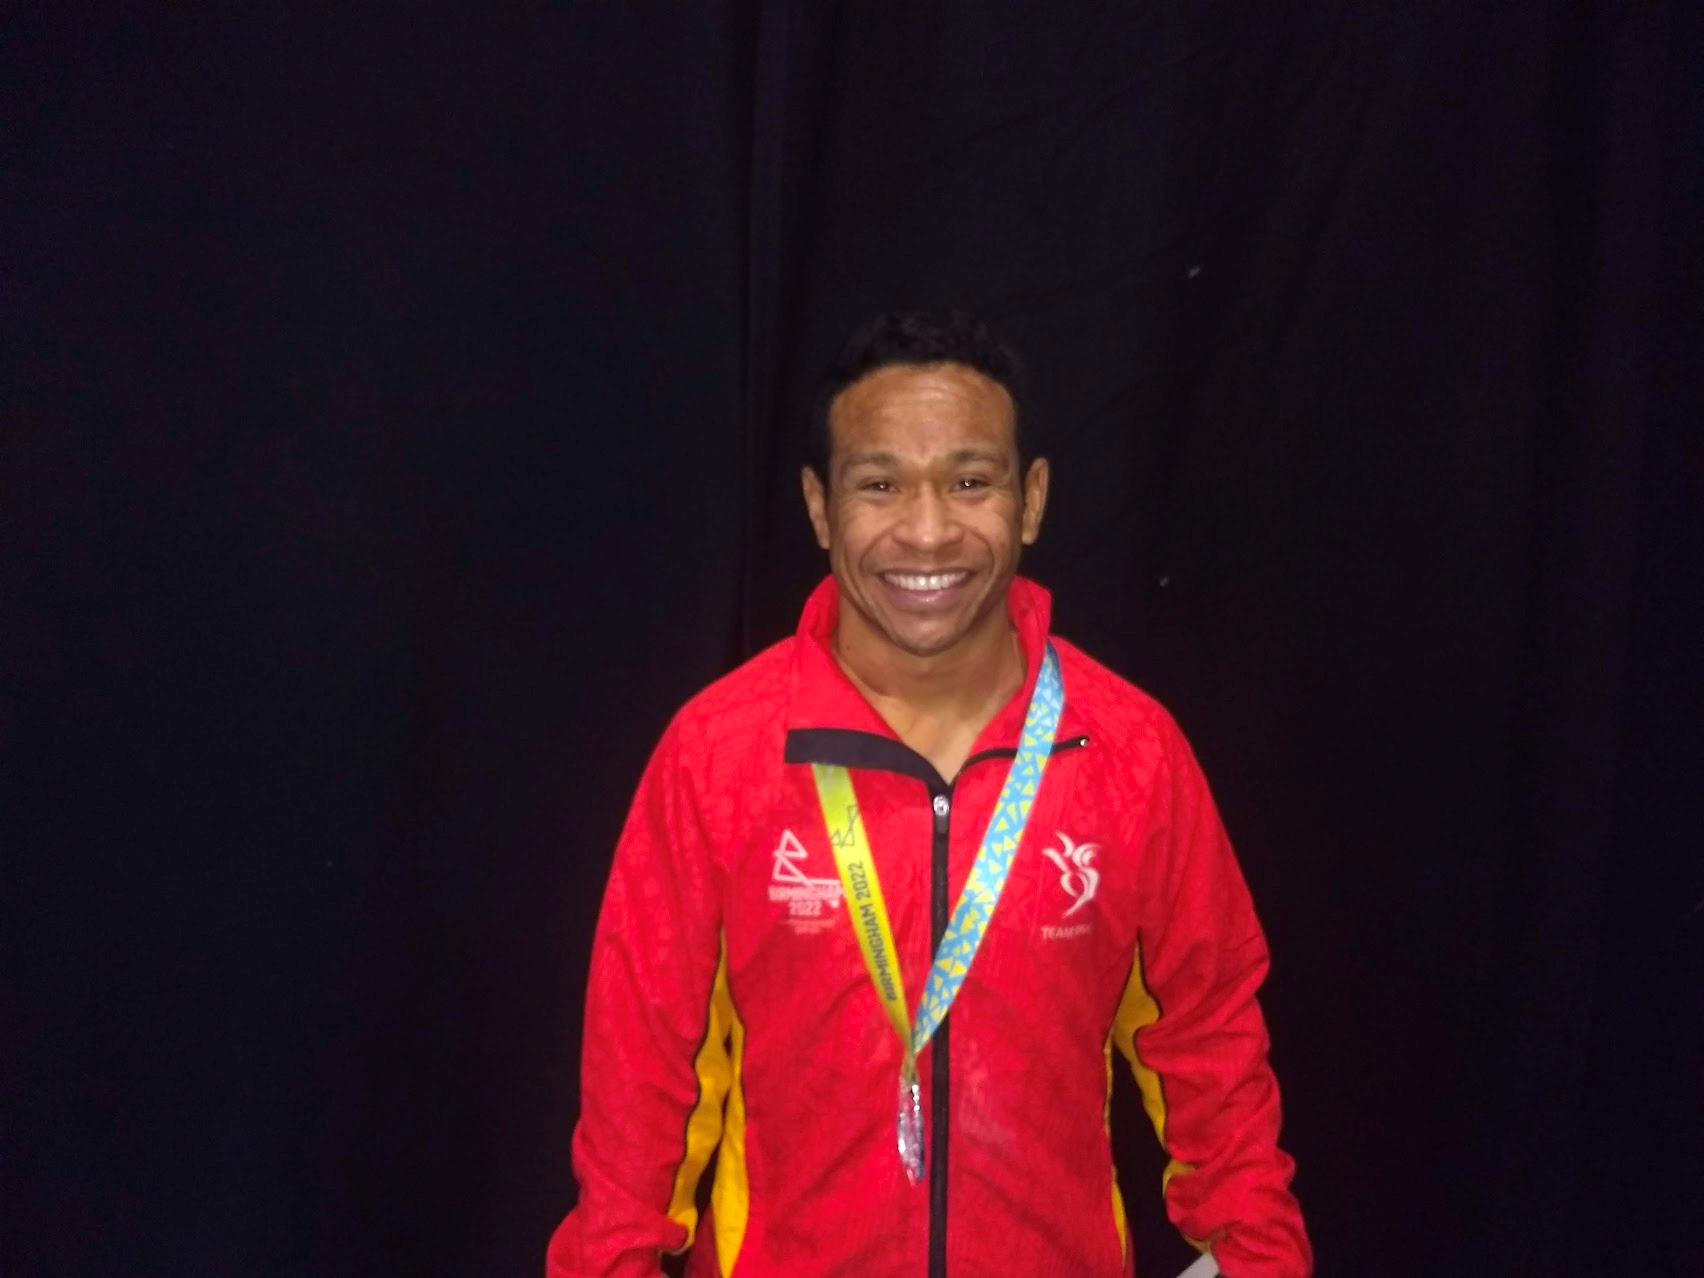 Dika Toua's second cousin Morea Baru won a silver medal in the men’s 61kg at Birmingham 2022 ©ITG